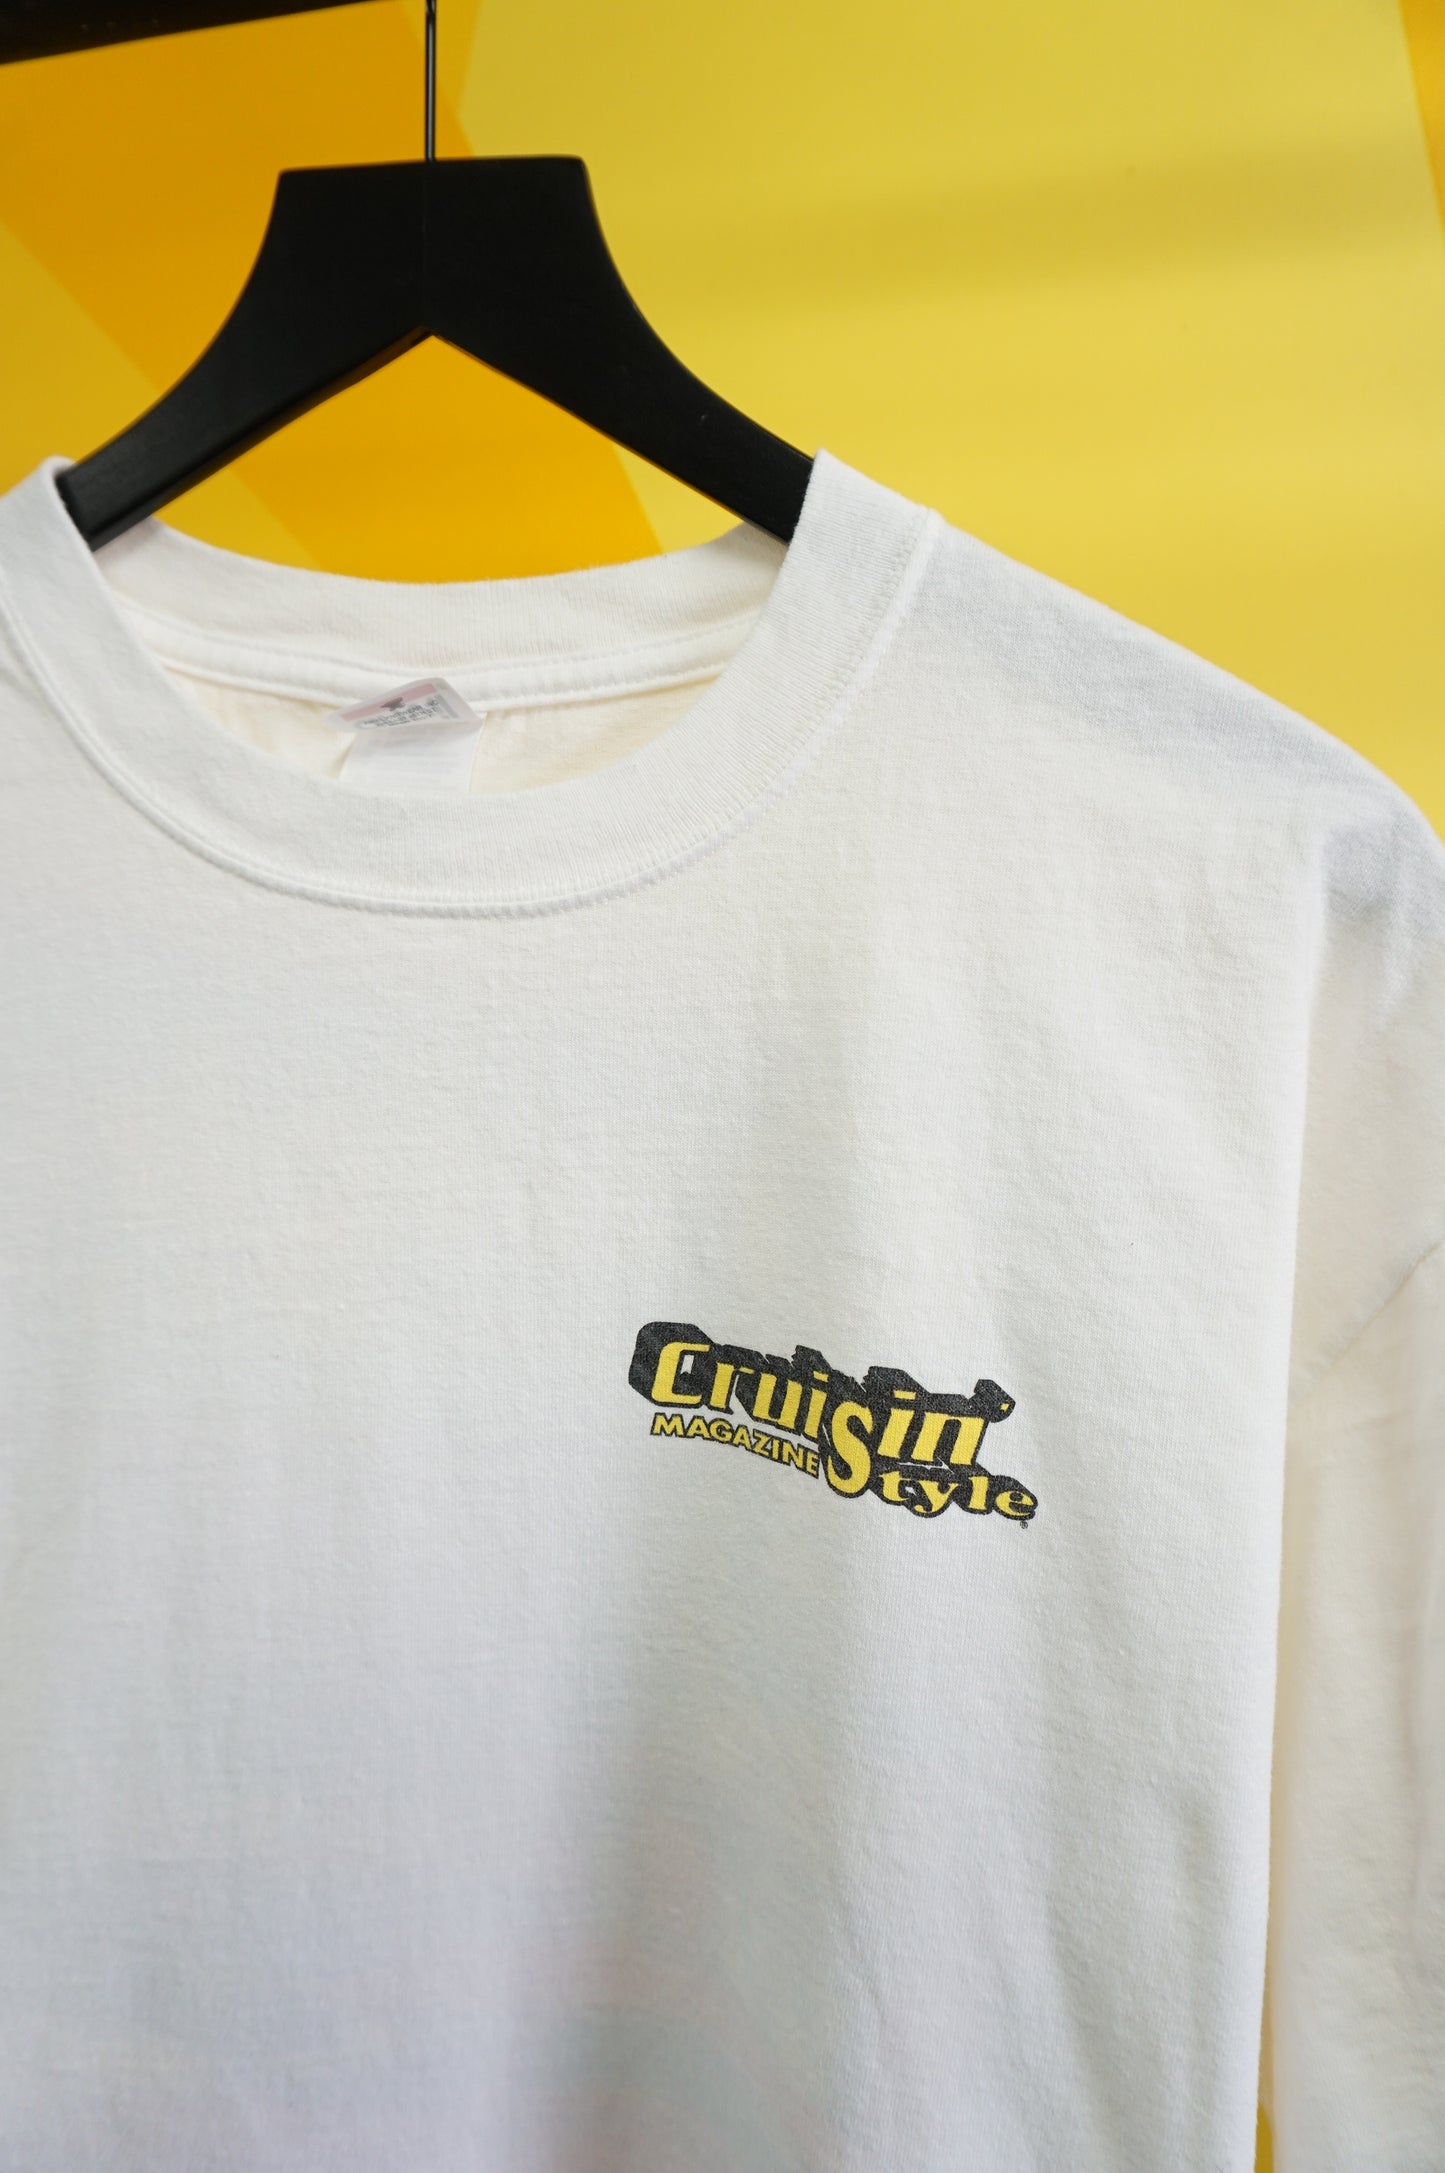 (XL) Cruisin' Style Magazine T-Shirt